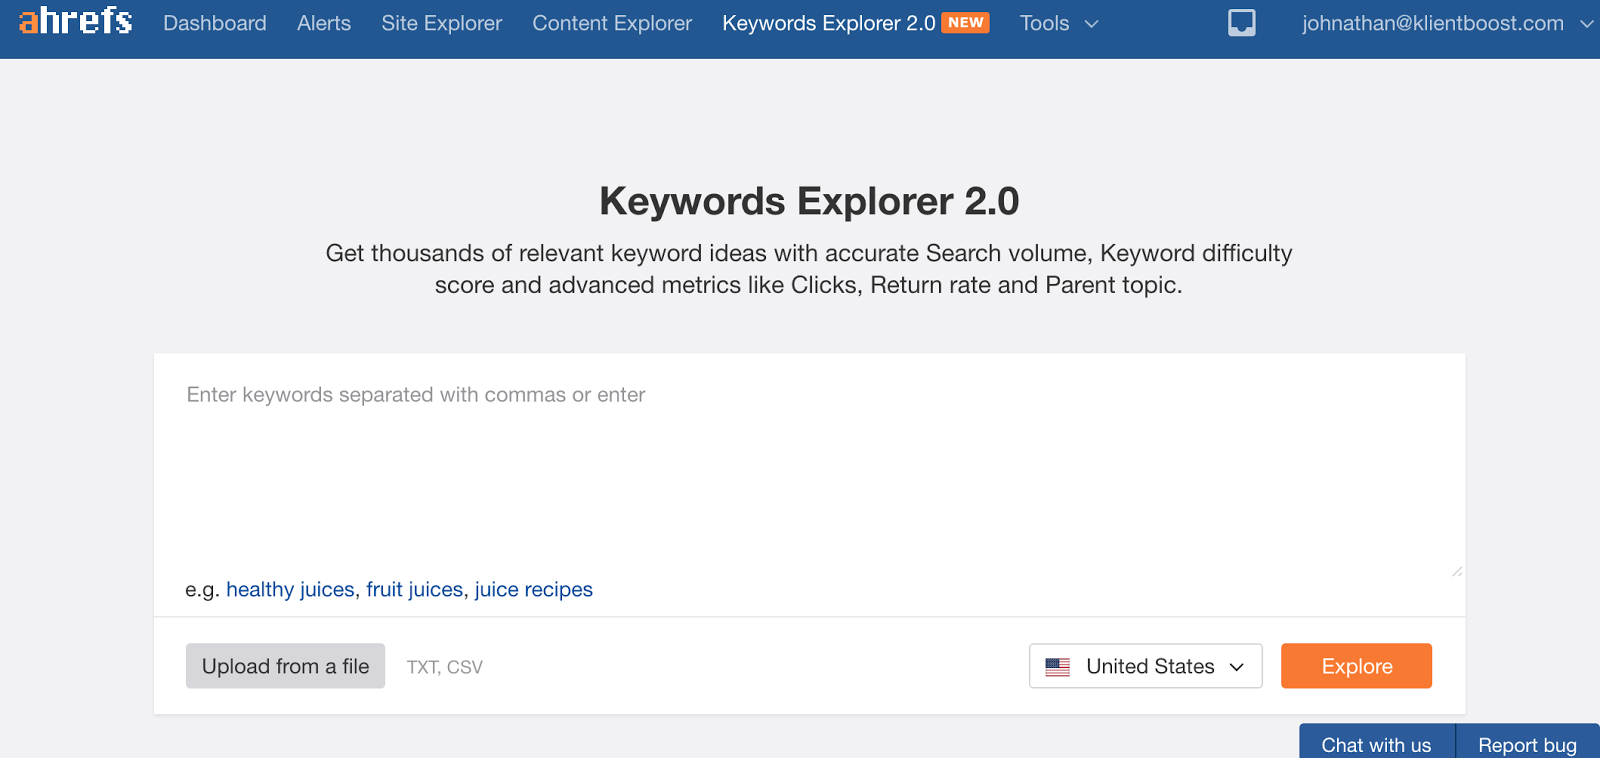 seo vs ppc keywords explorer 2.0